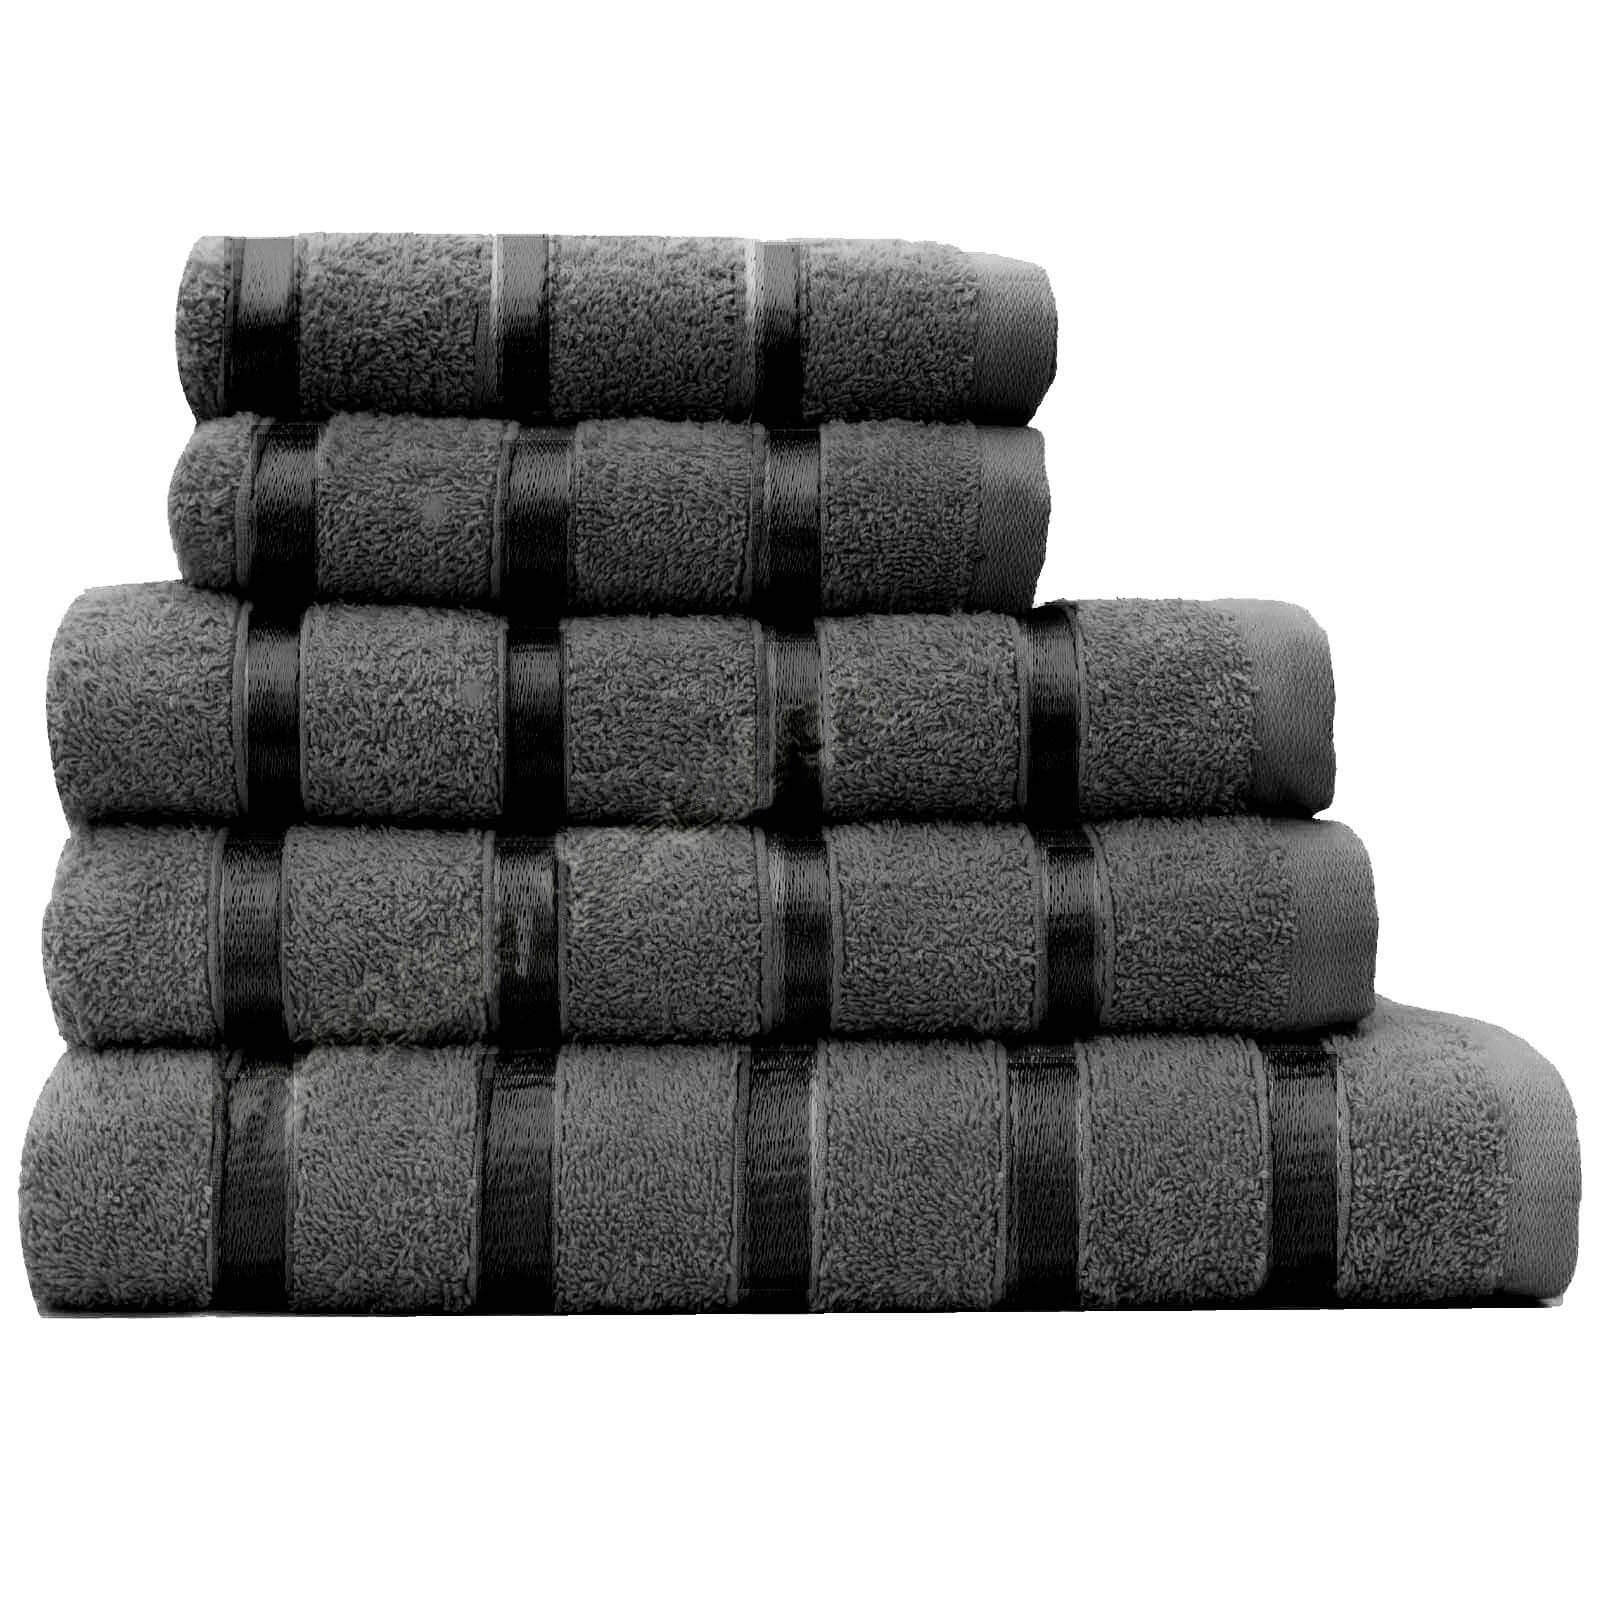 Egyptian Cotton Satin Stripe Towels Hand Towel Bath Towel Bath Sheets 500 GSM 